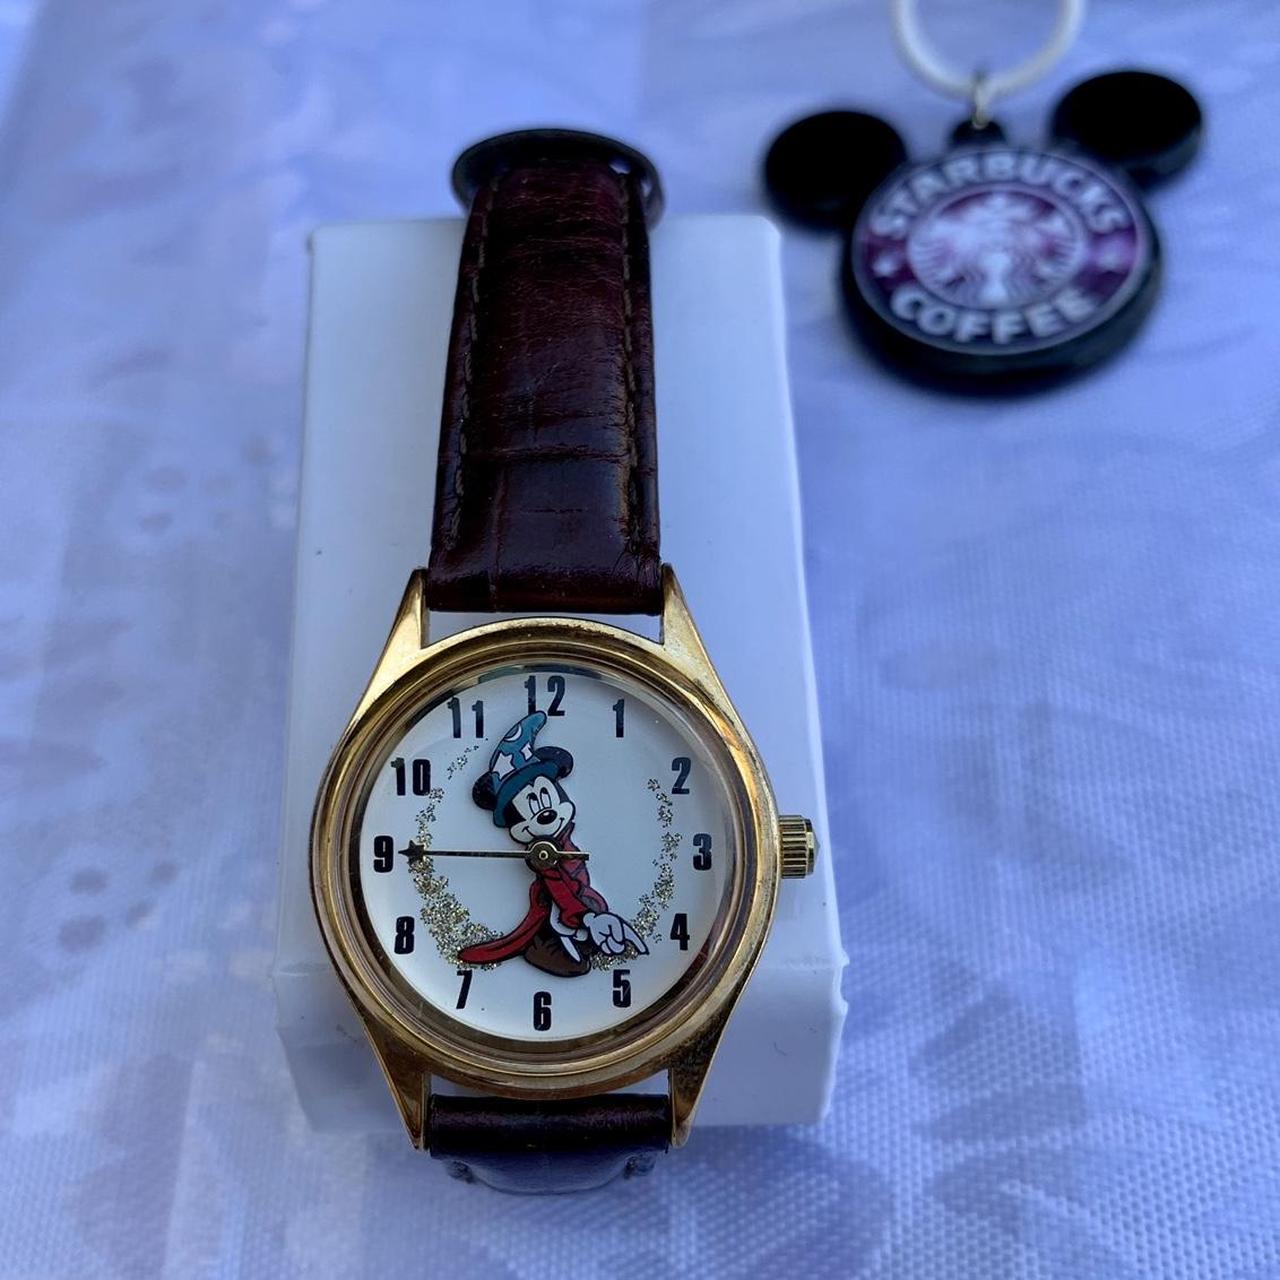 Disney Men's Gold and Brown Watch